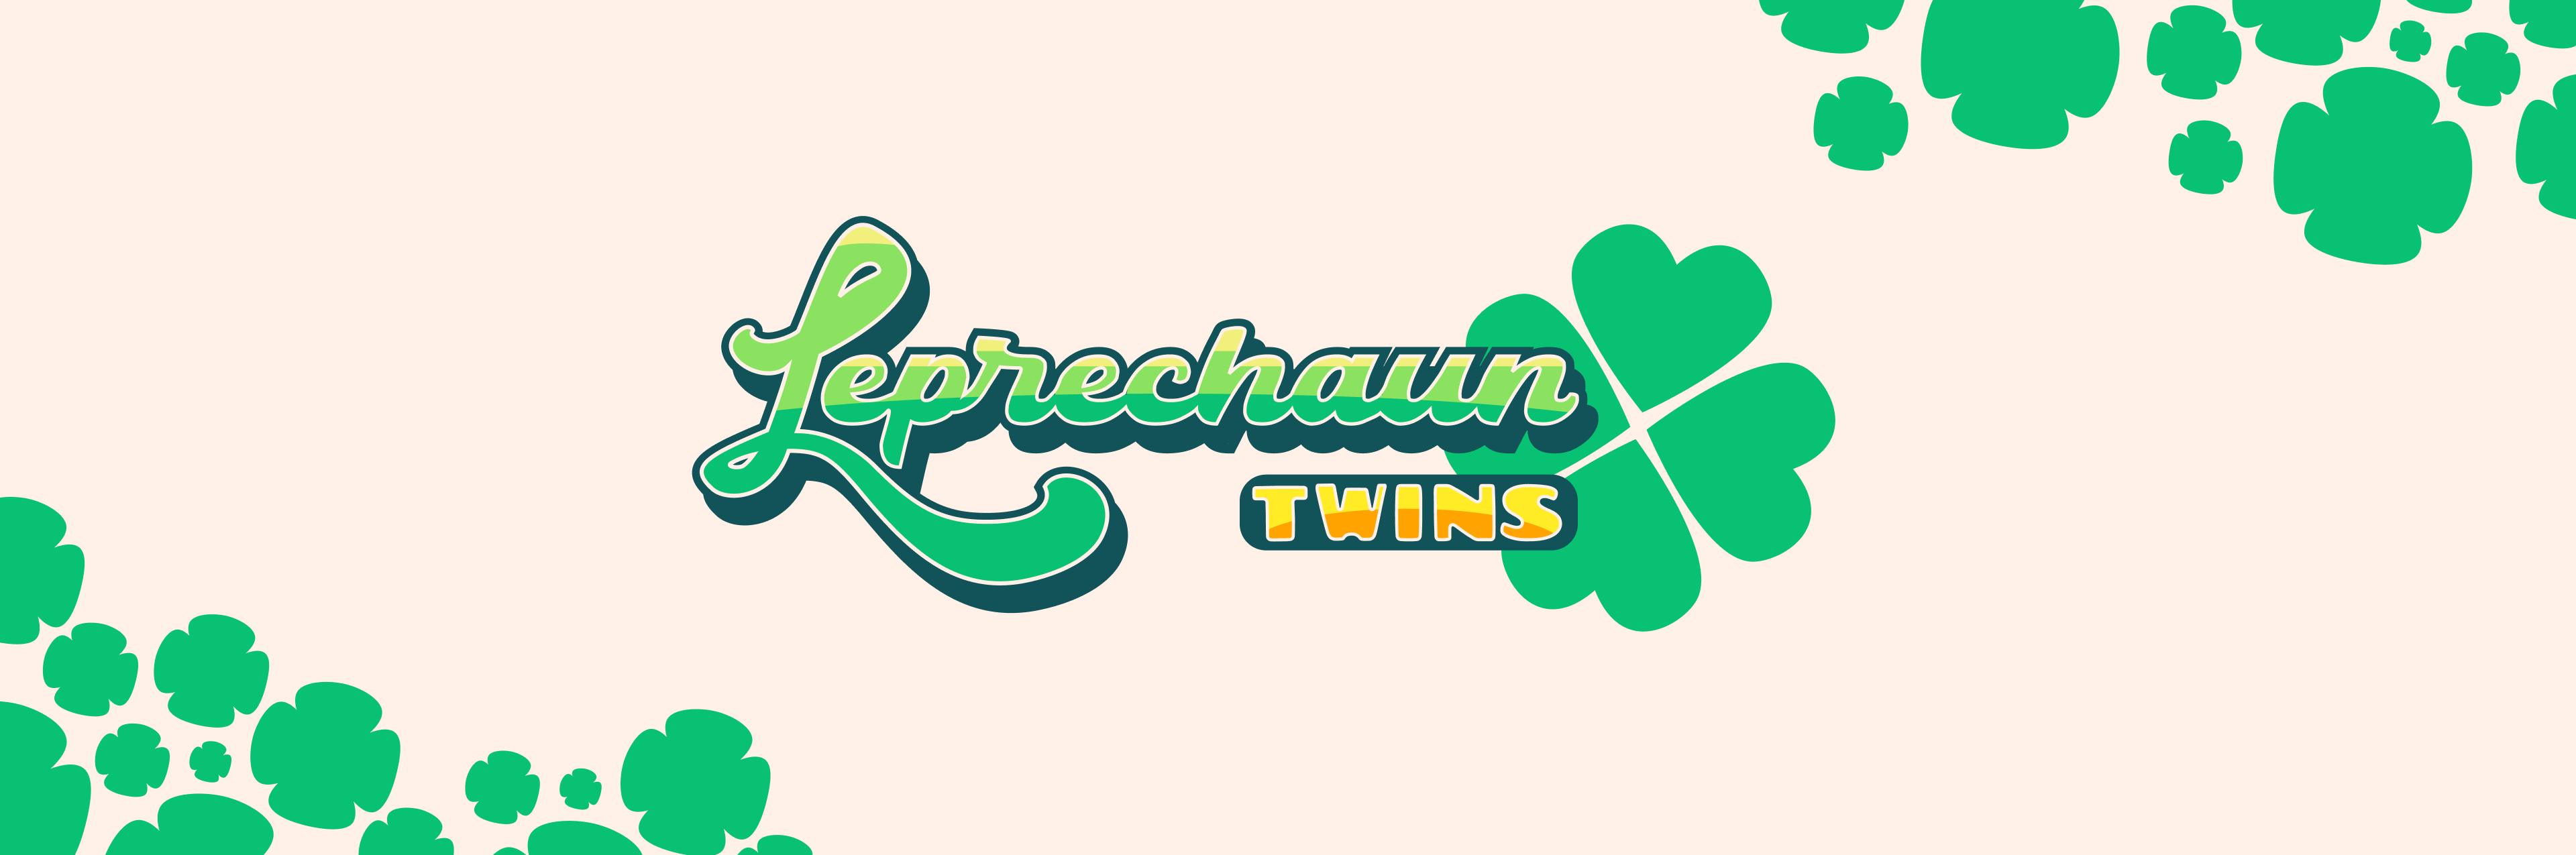 The Leprechaun Twins